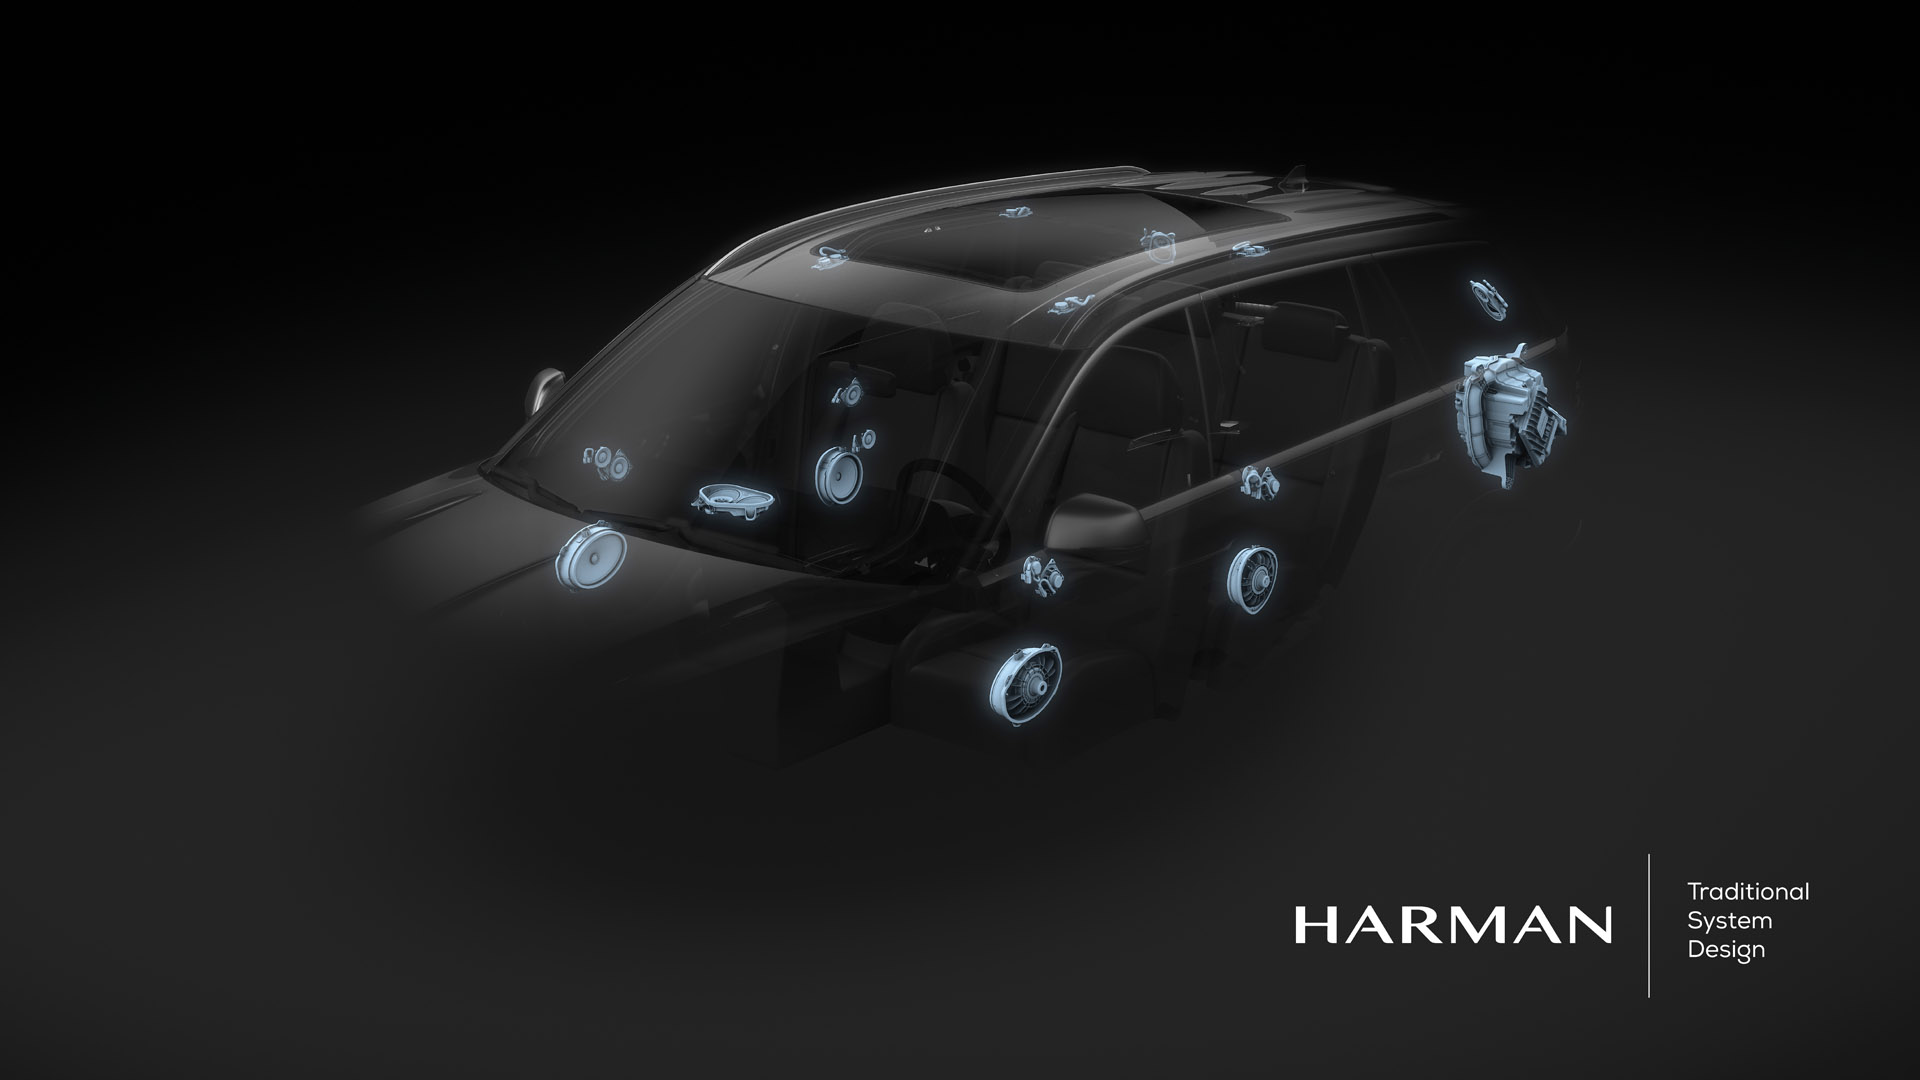 Harman audio system